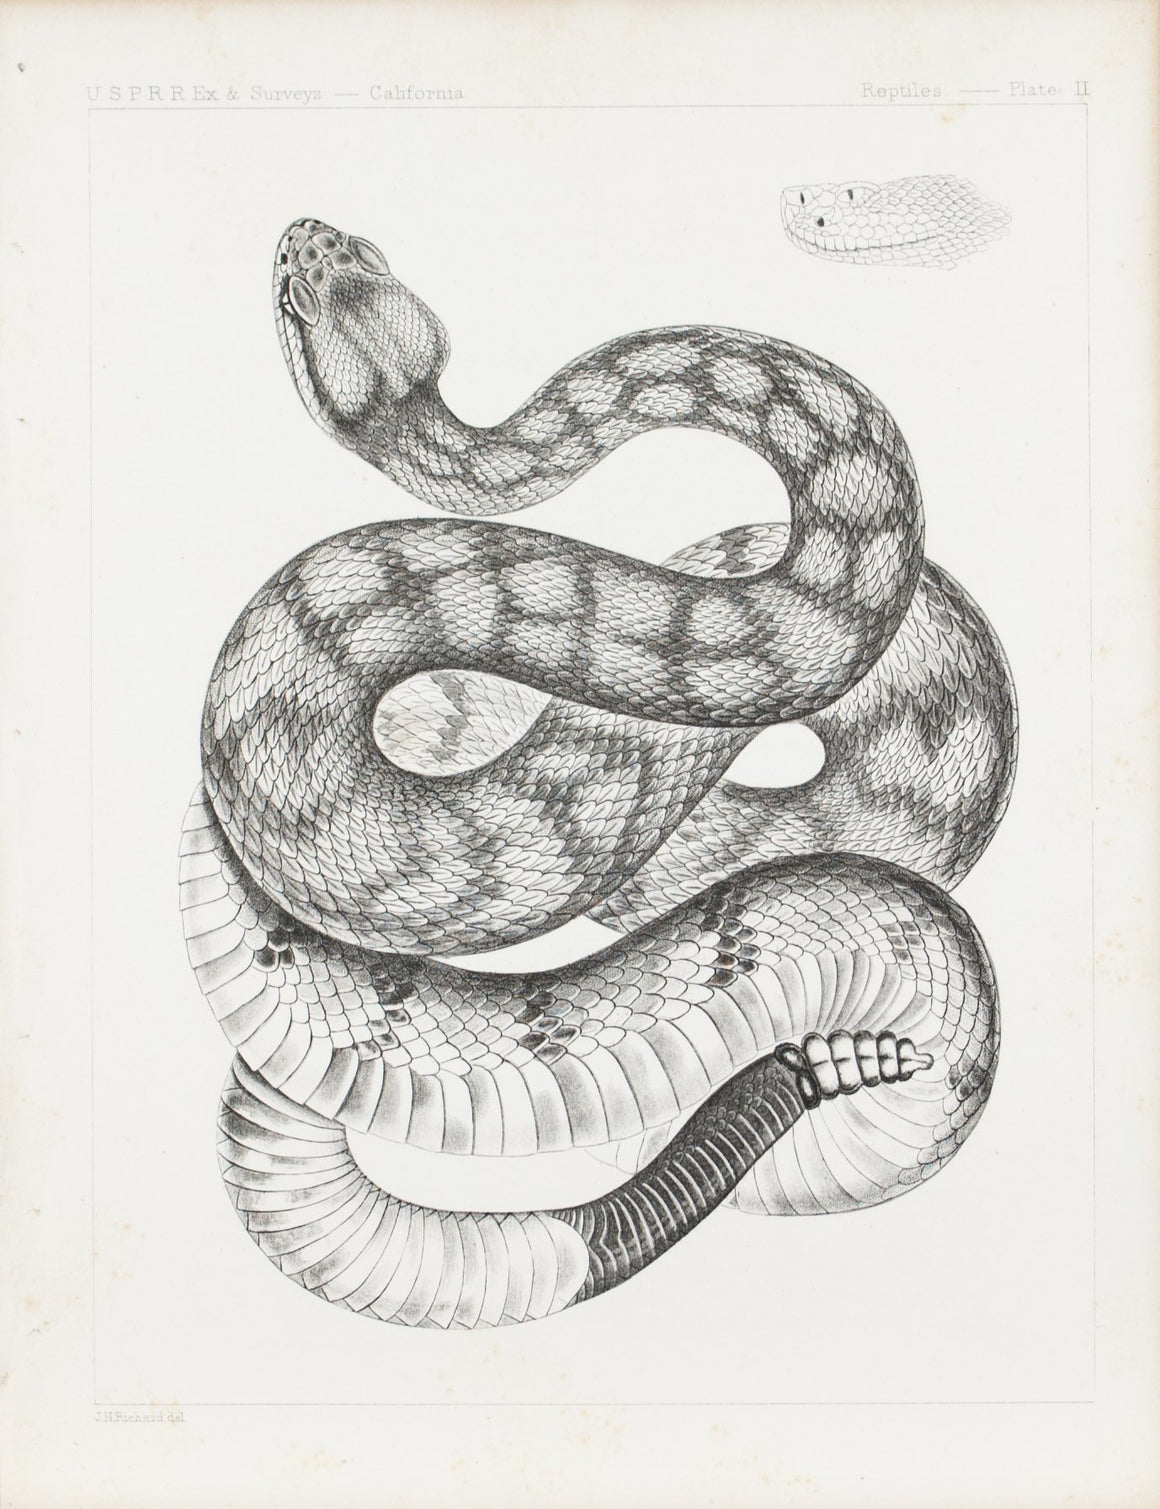 Cobra Snake Plate II 1859 U.S.P.R.R. Lithograph Reptiles Print